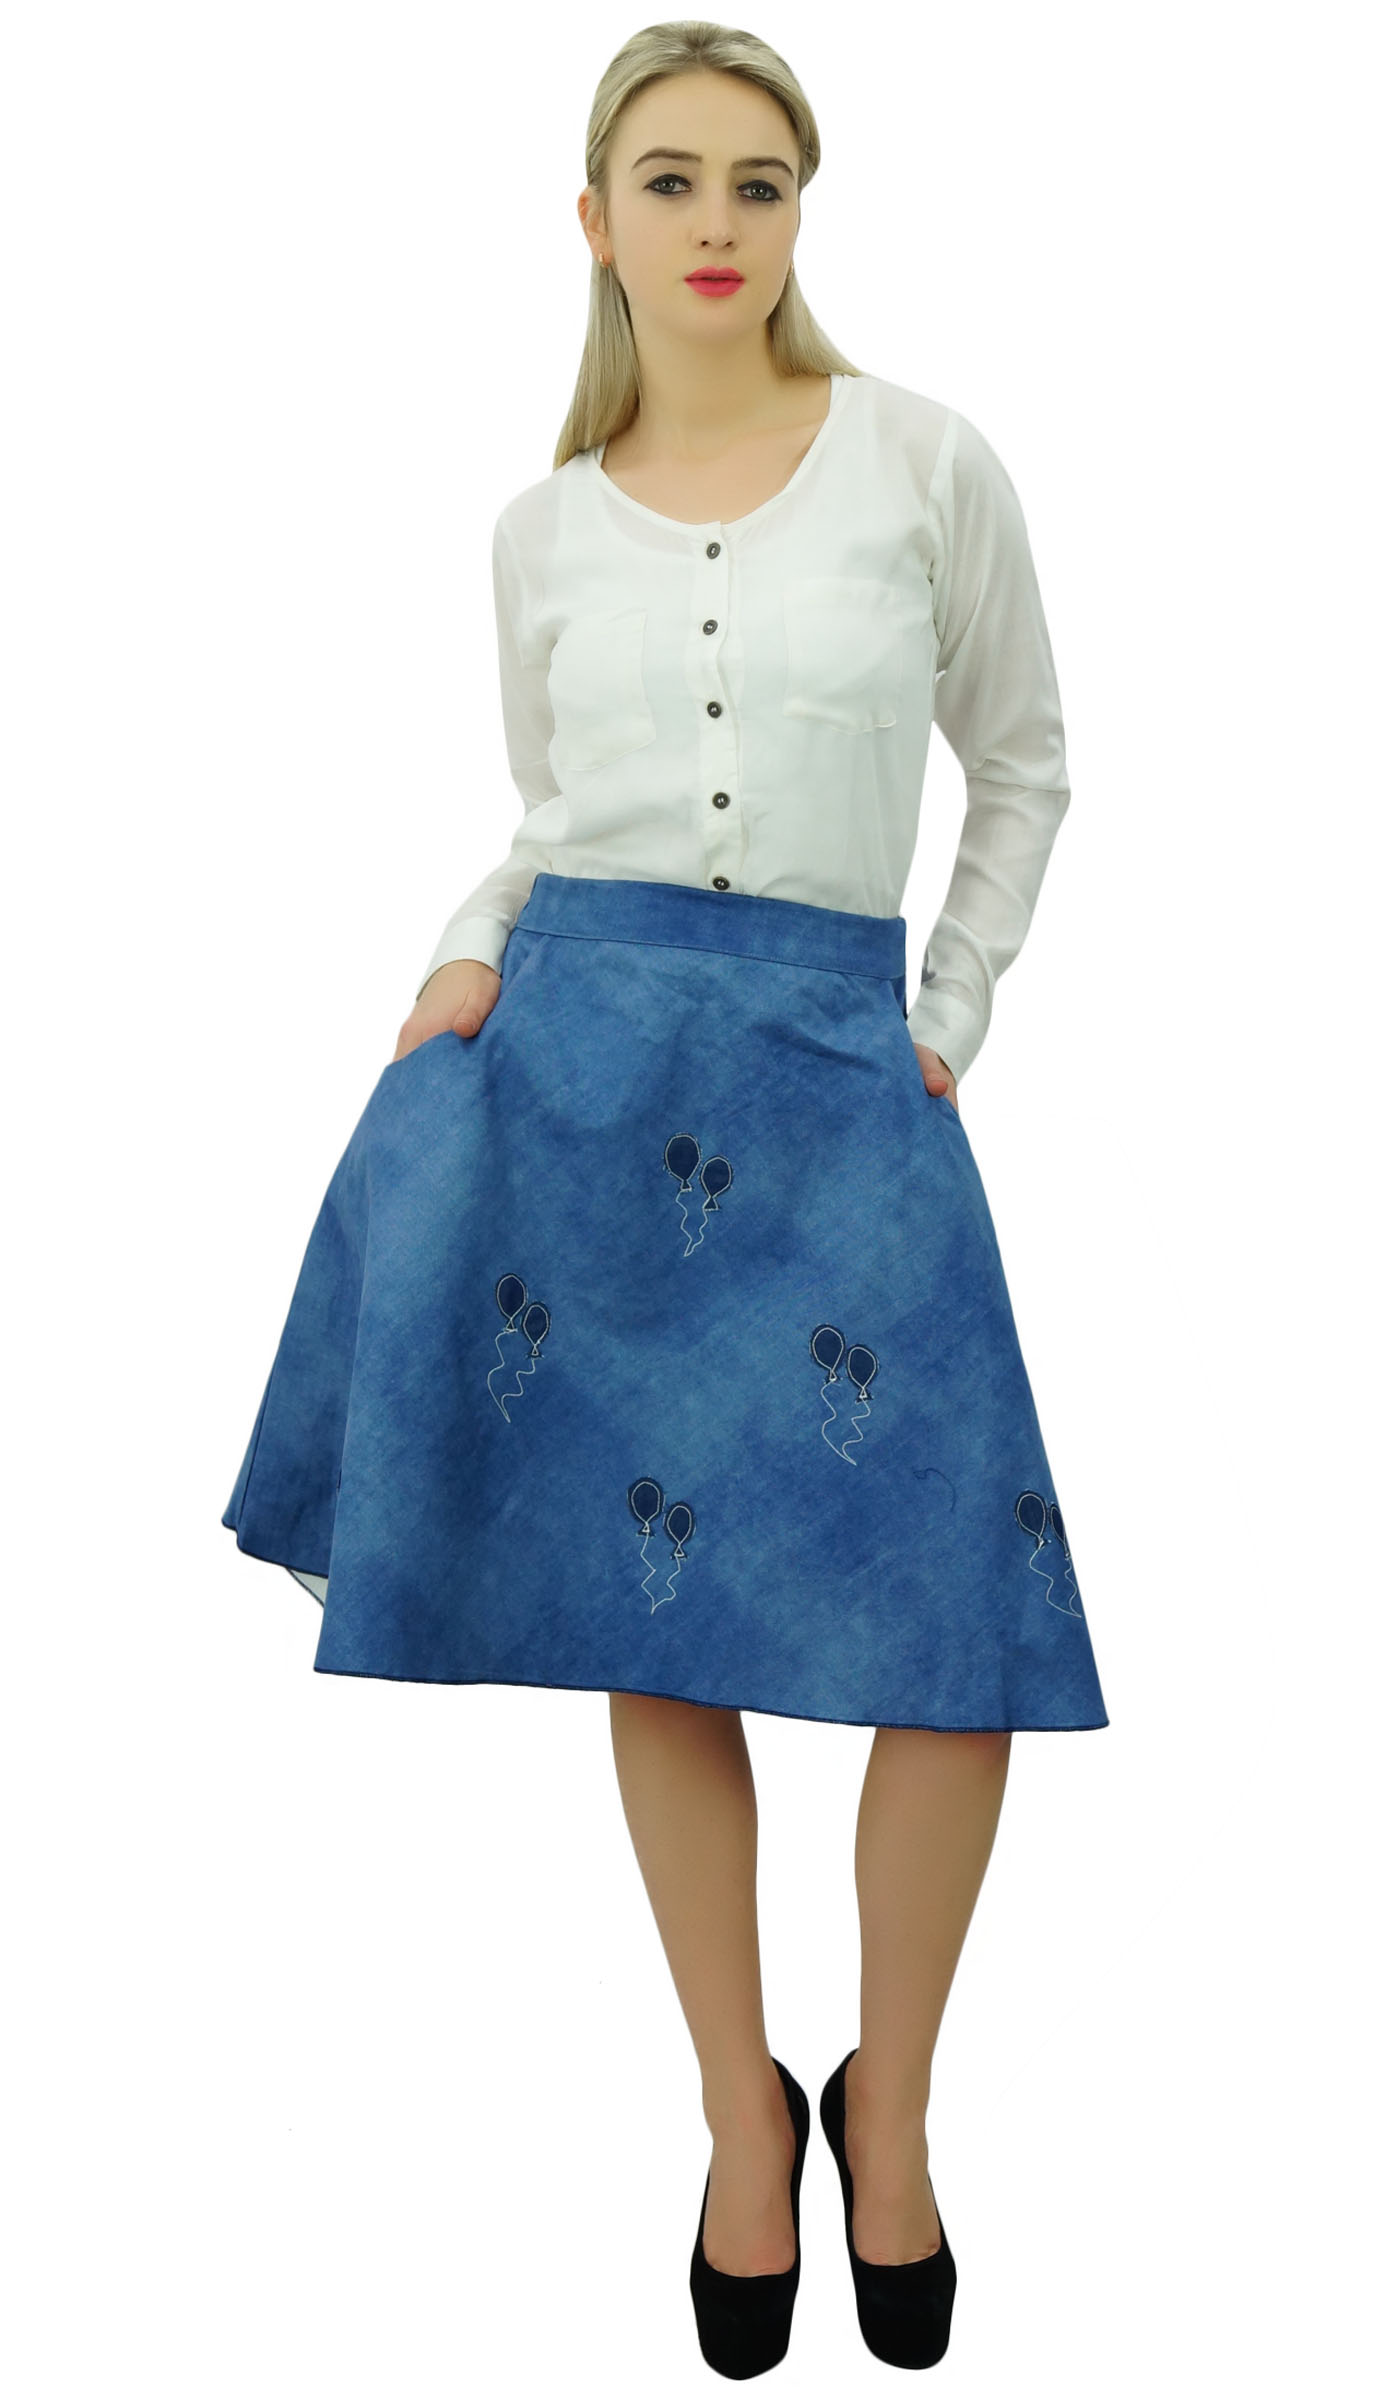 Bimba Women's Denim Circle Skirt knee Length Casual A-Line Skirt-FG7 | eBay